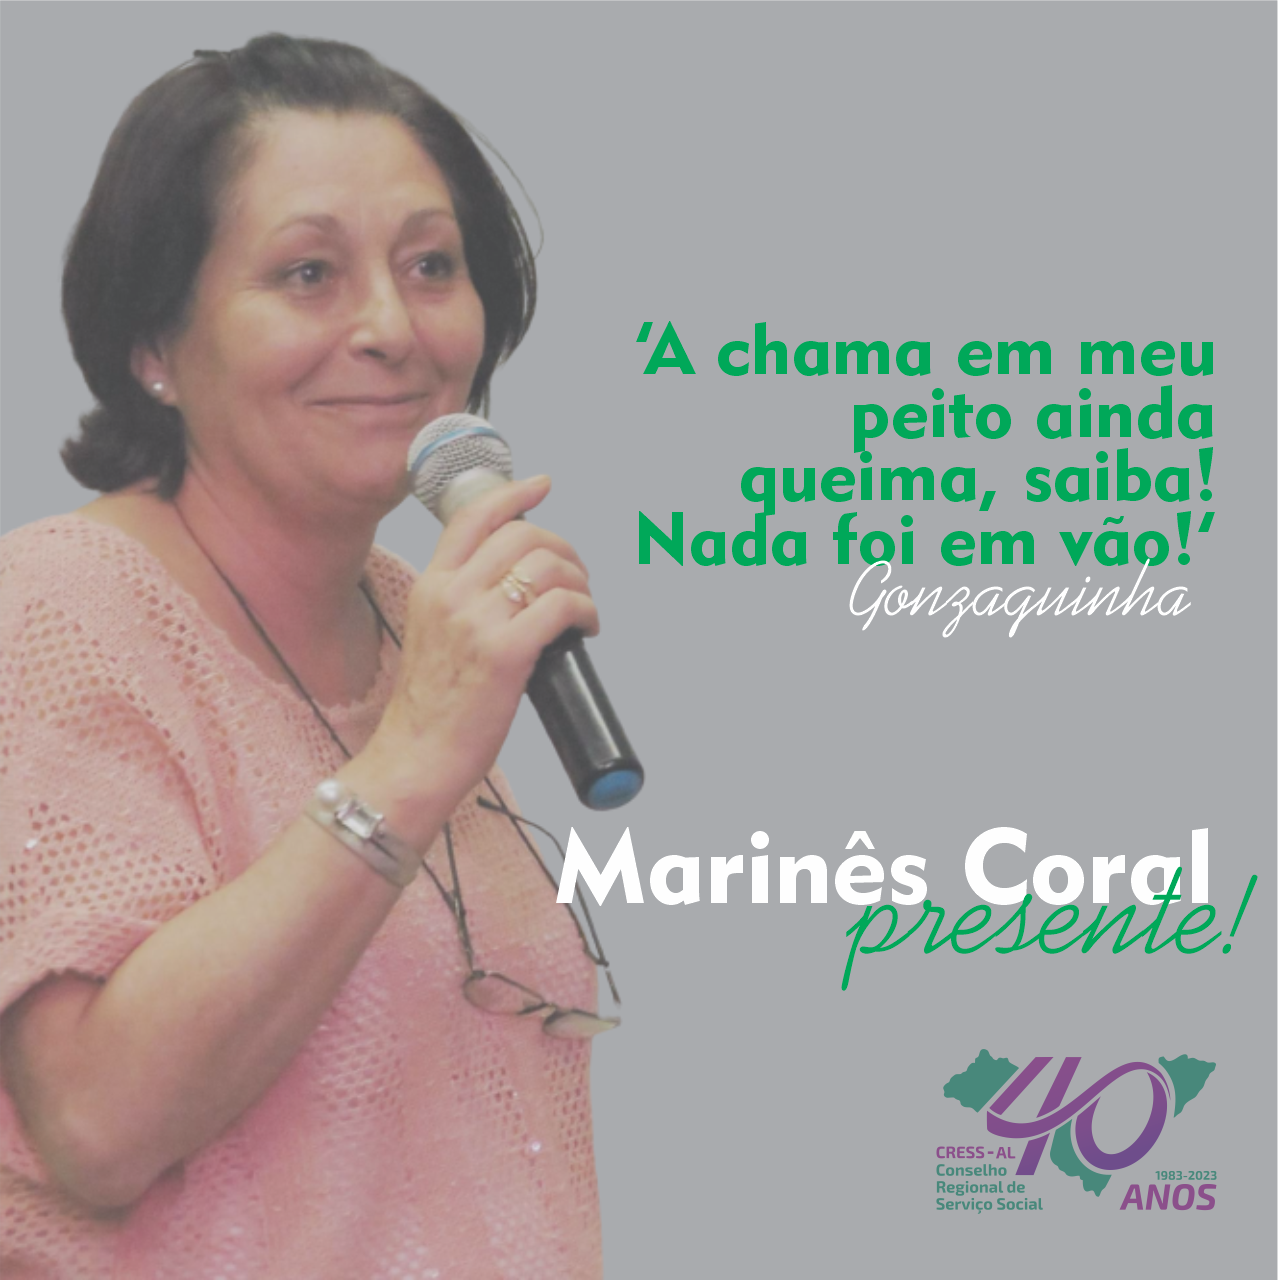 CRESS Alagoas se despede da professora Marinês Coral